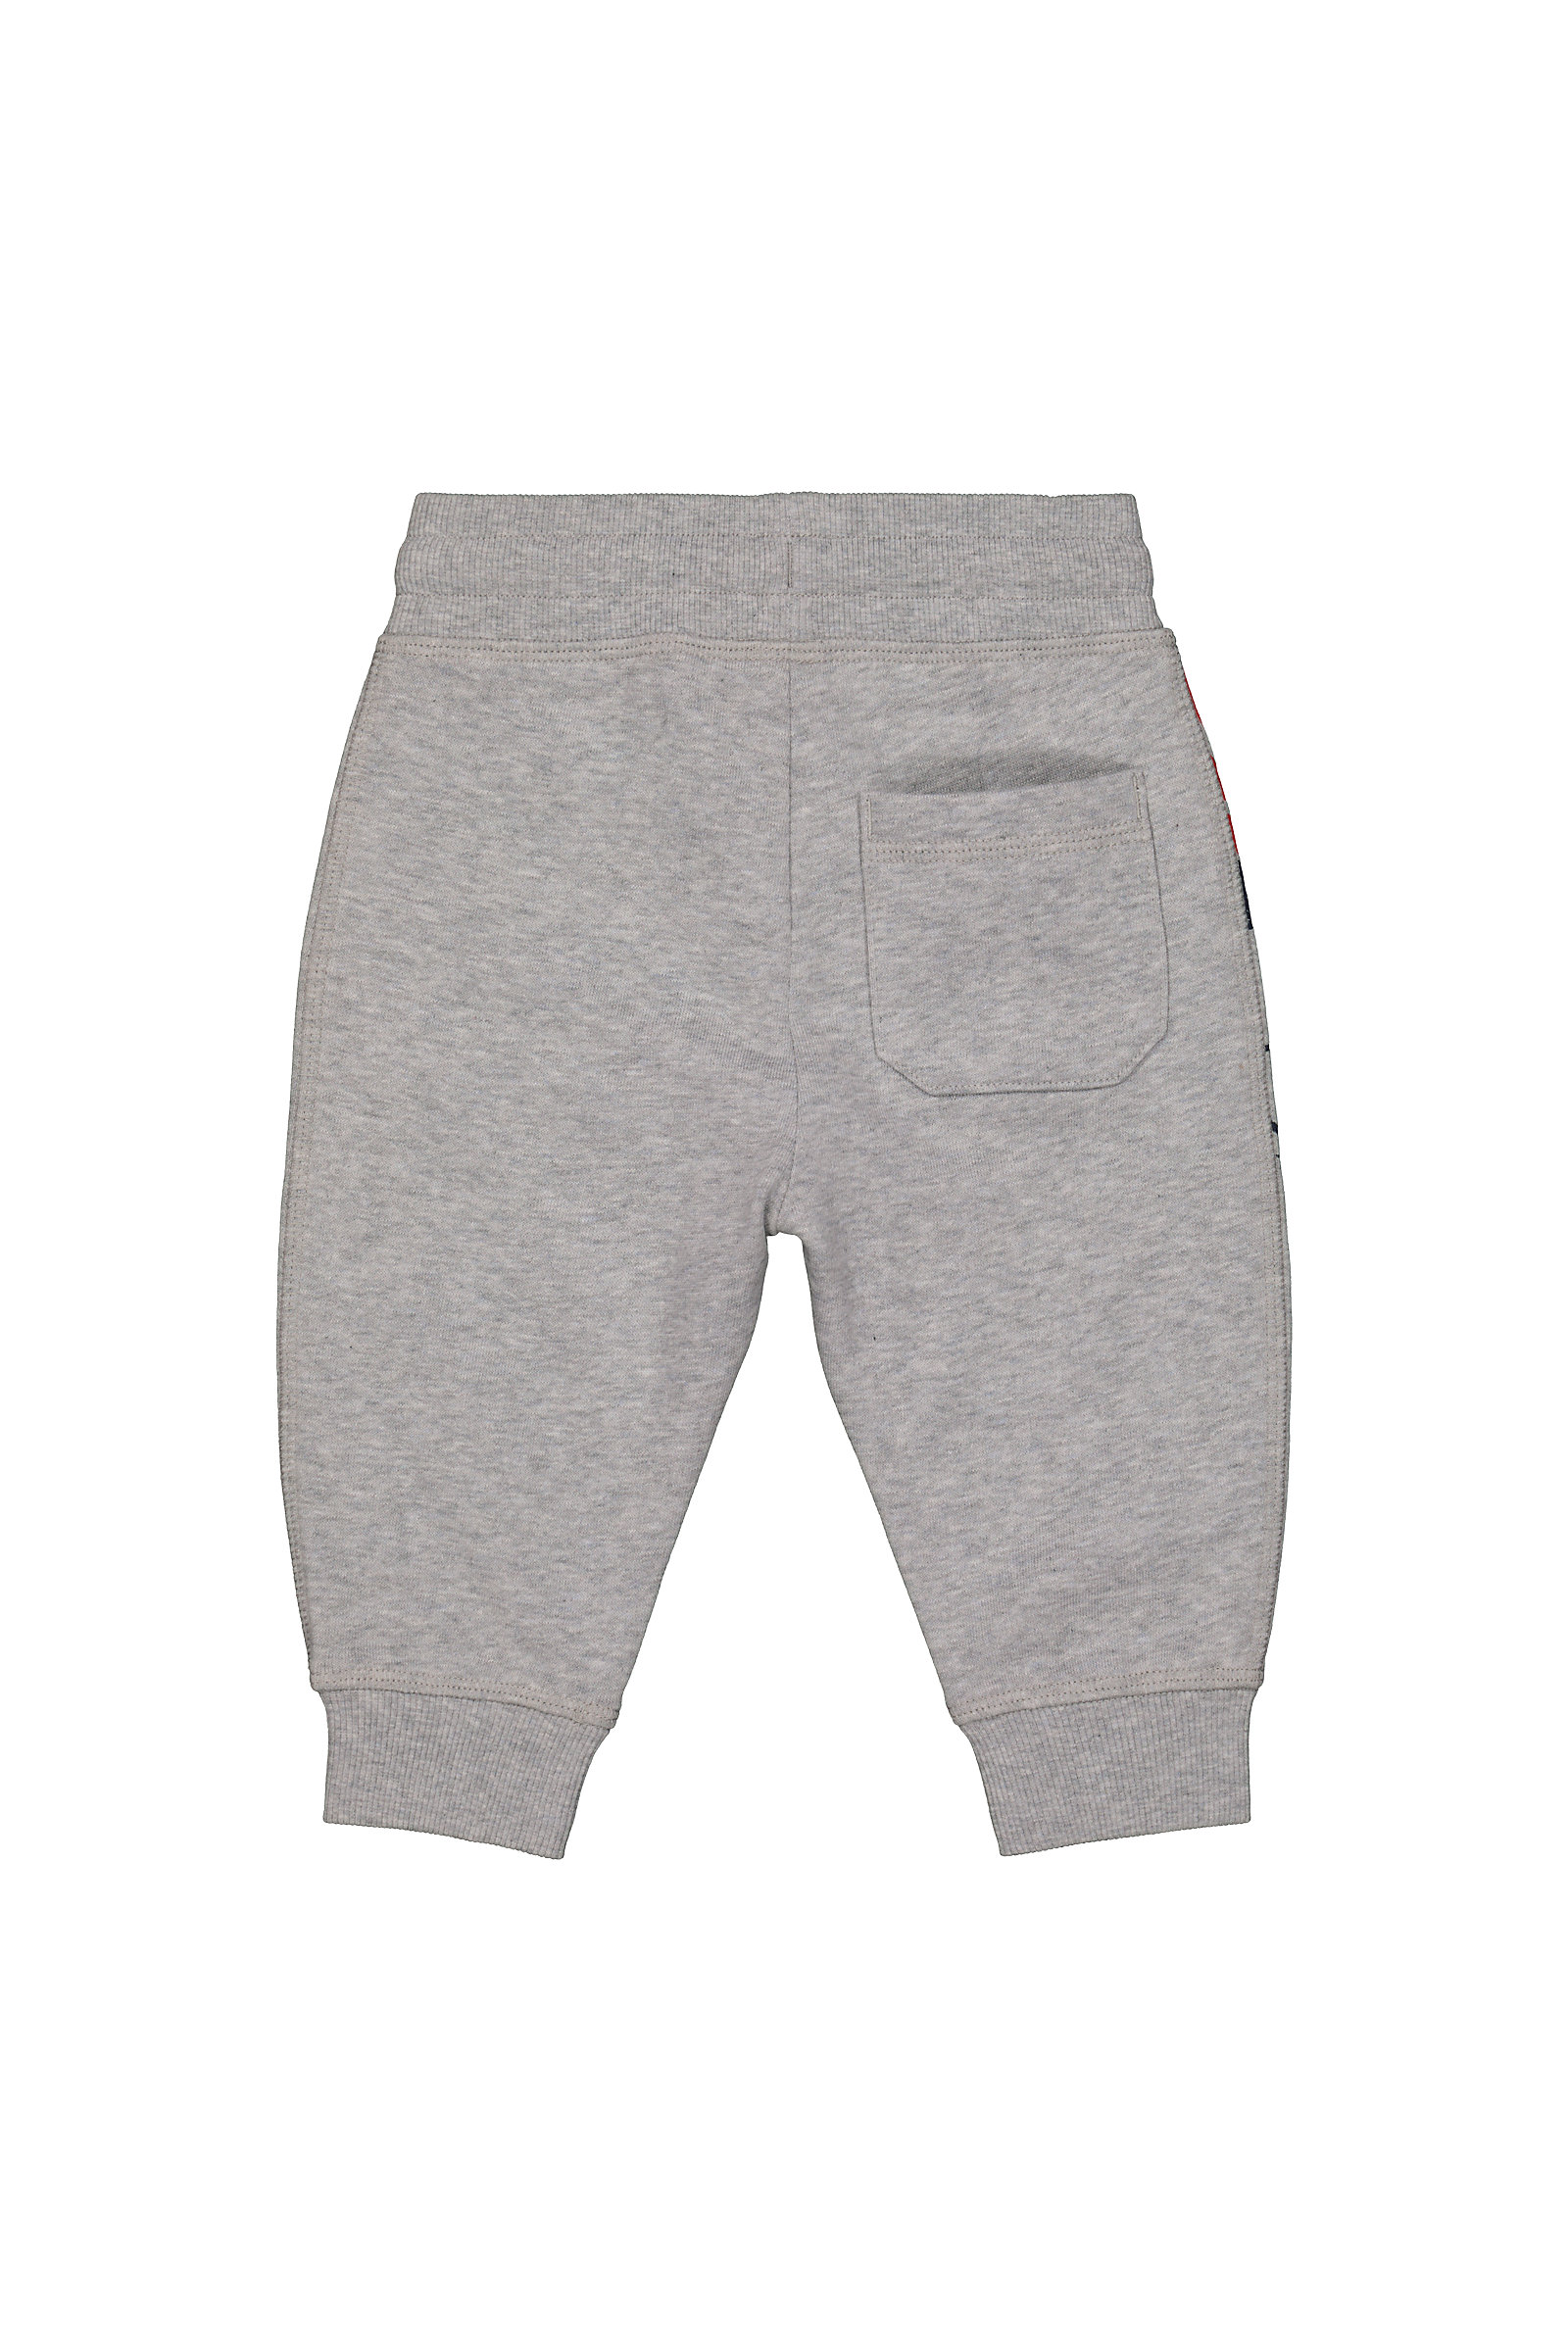 Mothercare Boys Printed Grey Track Pants